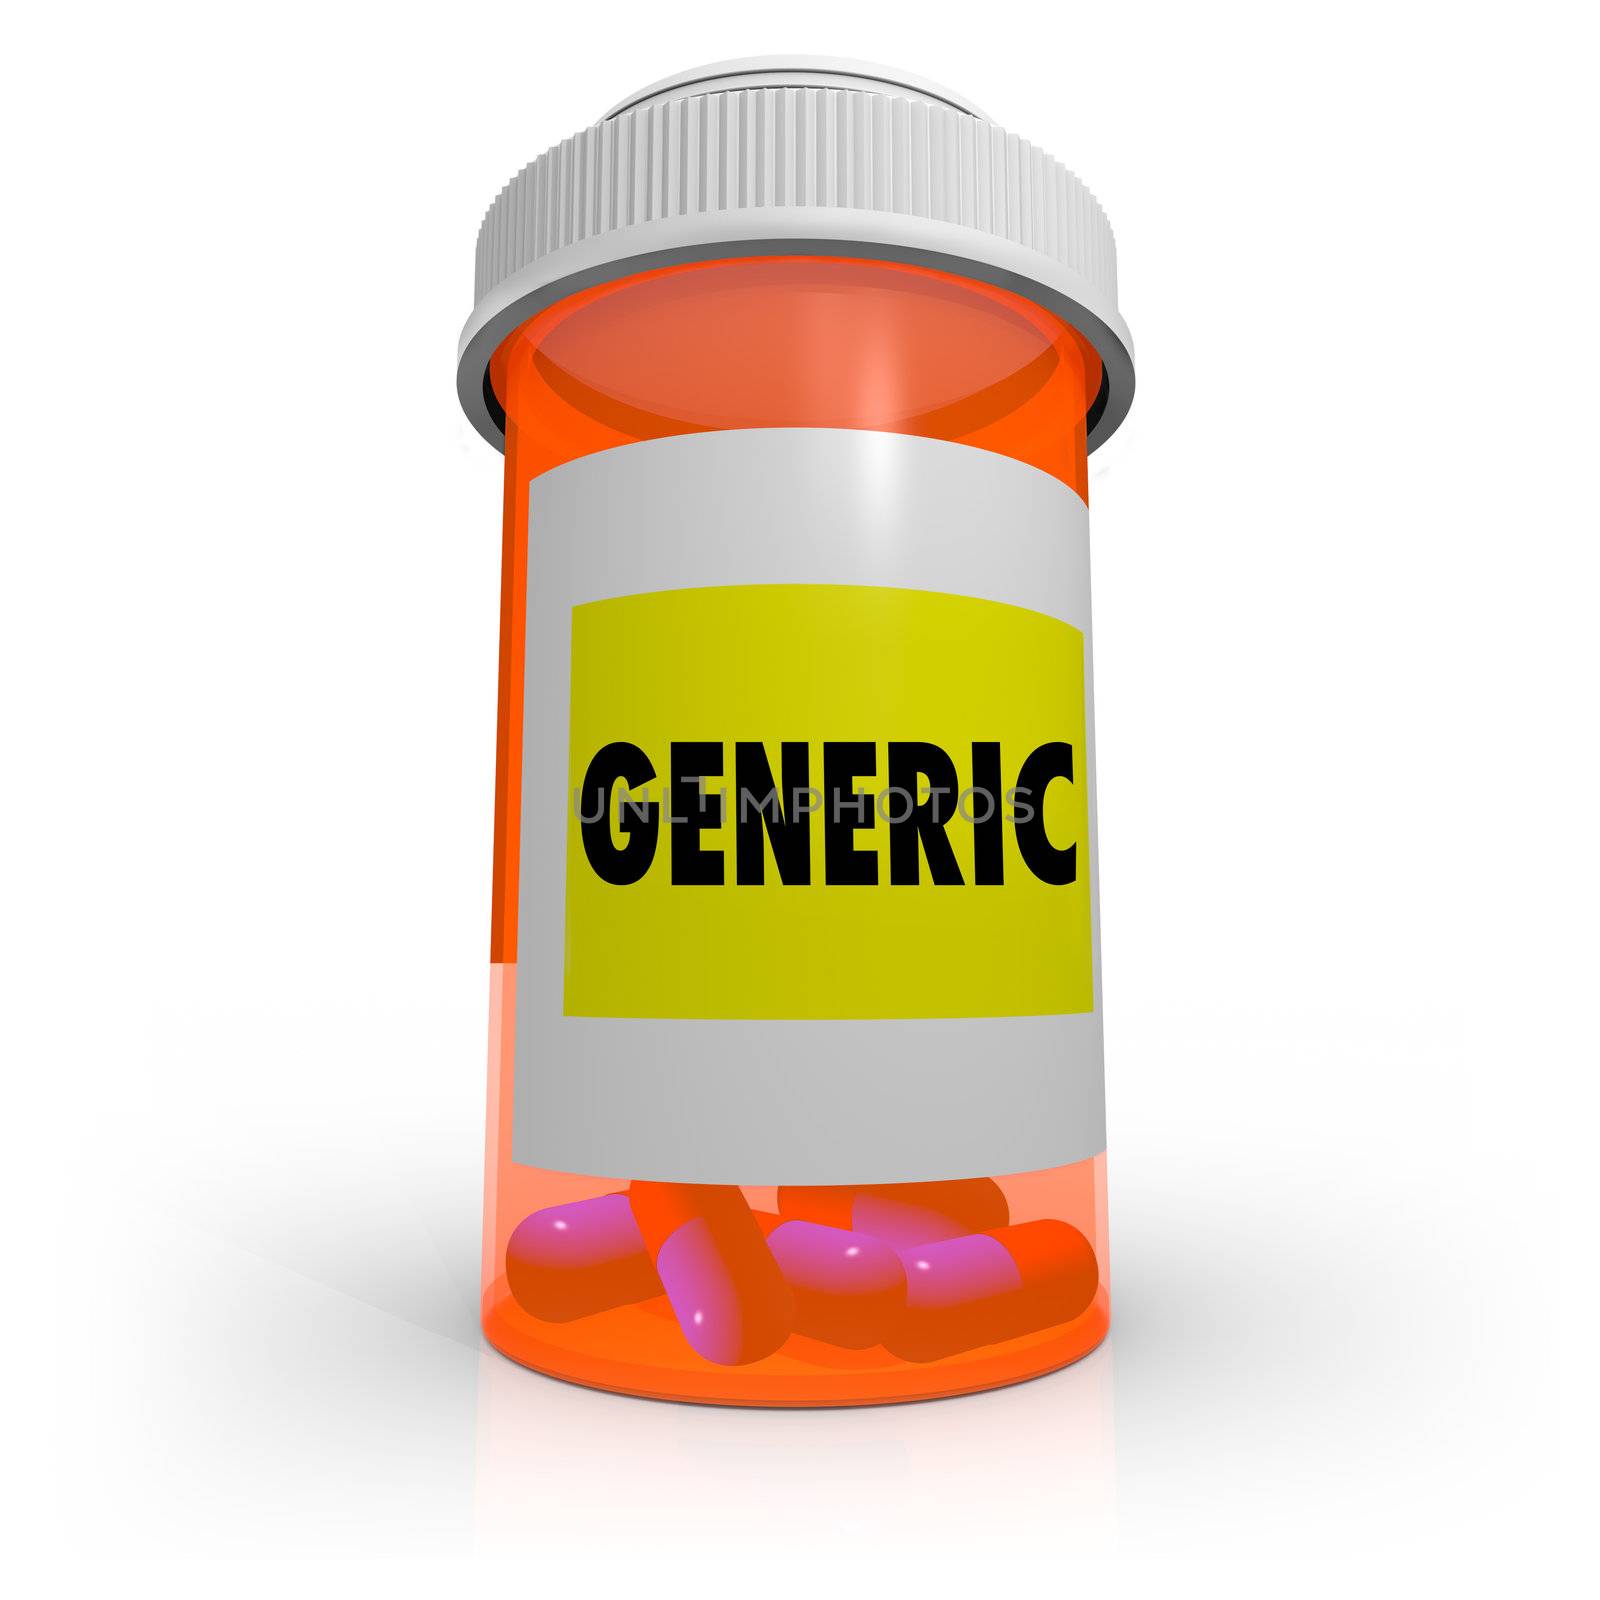 An orange prescription bottle that contains several pills has a label that reads Generic